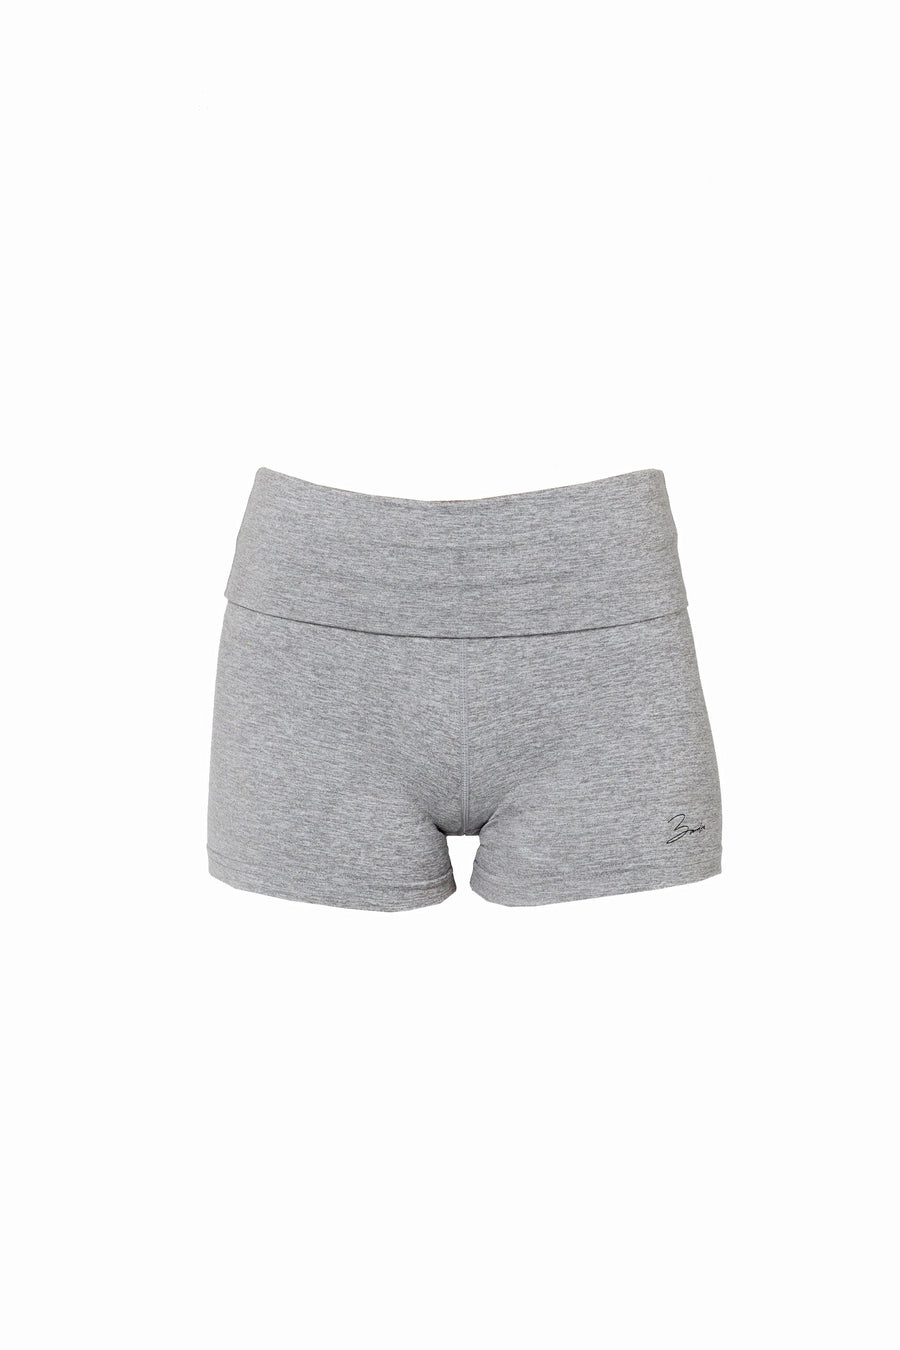 BASE shorts - grey  -  CLOTHING  -  B Ā M B A S W I M